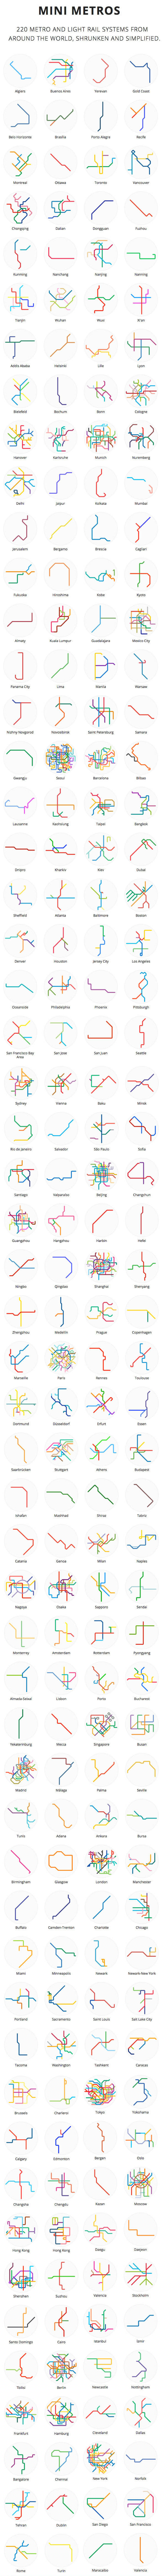 mini-mappe metro